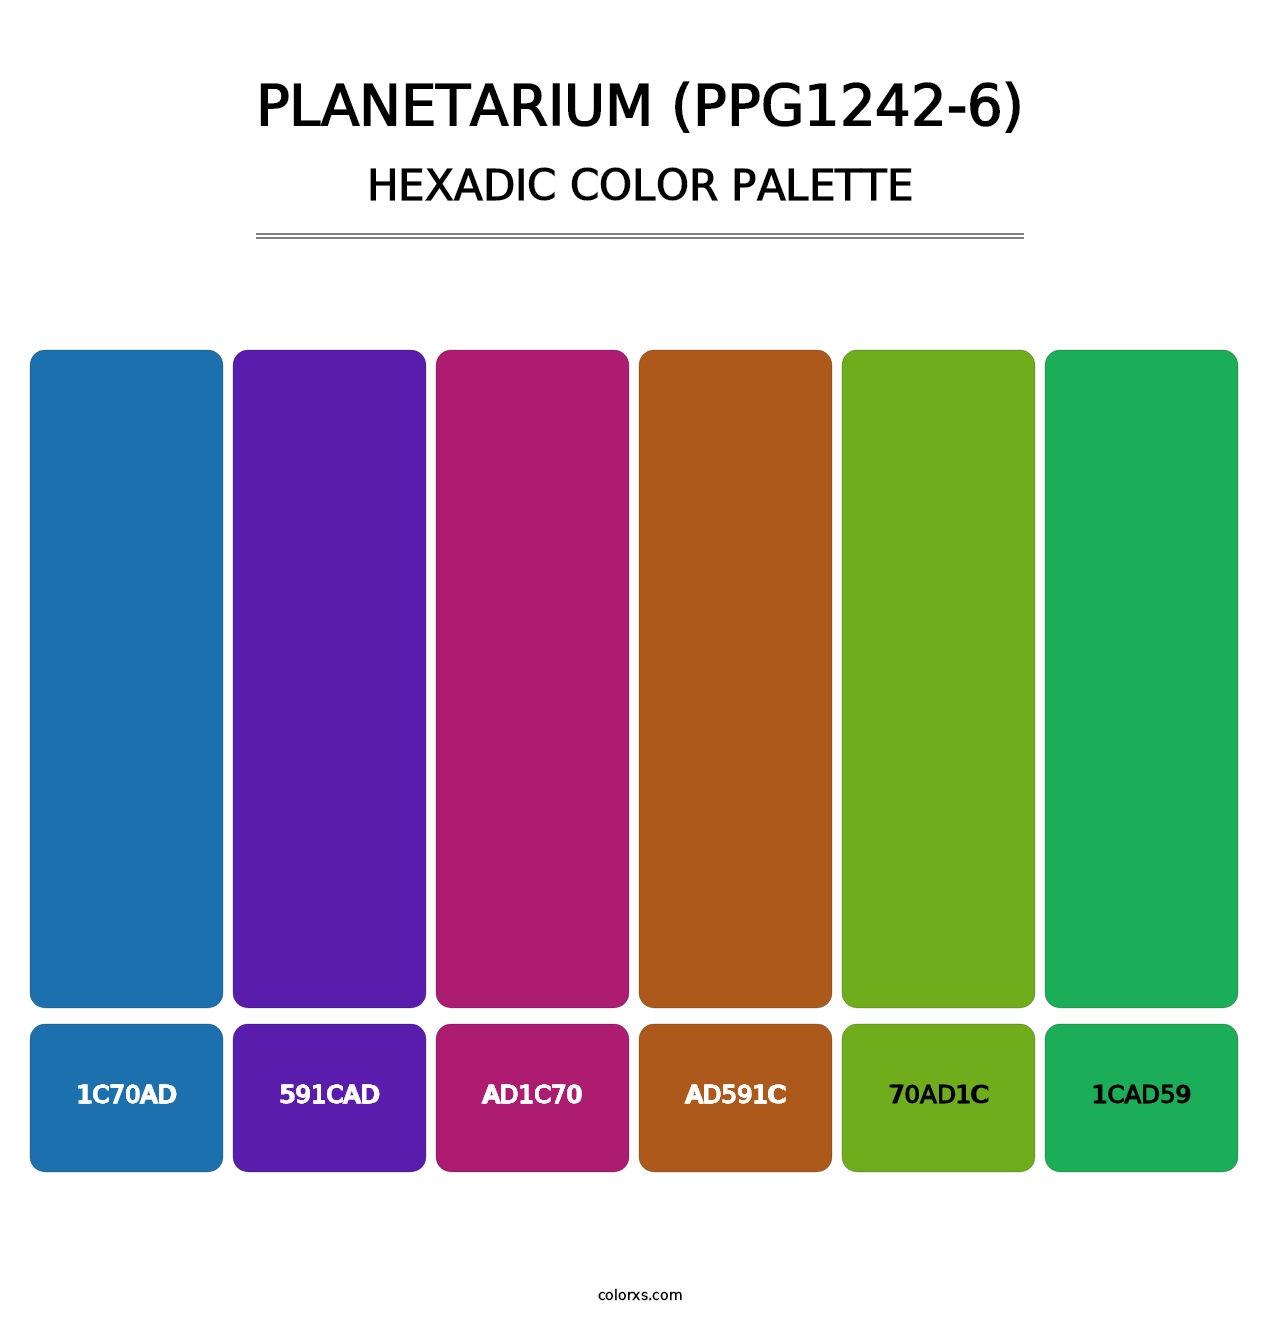 Planetarium (PPG1242-6) - Hexadic Color Palette